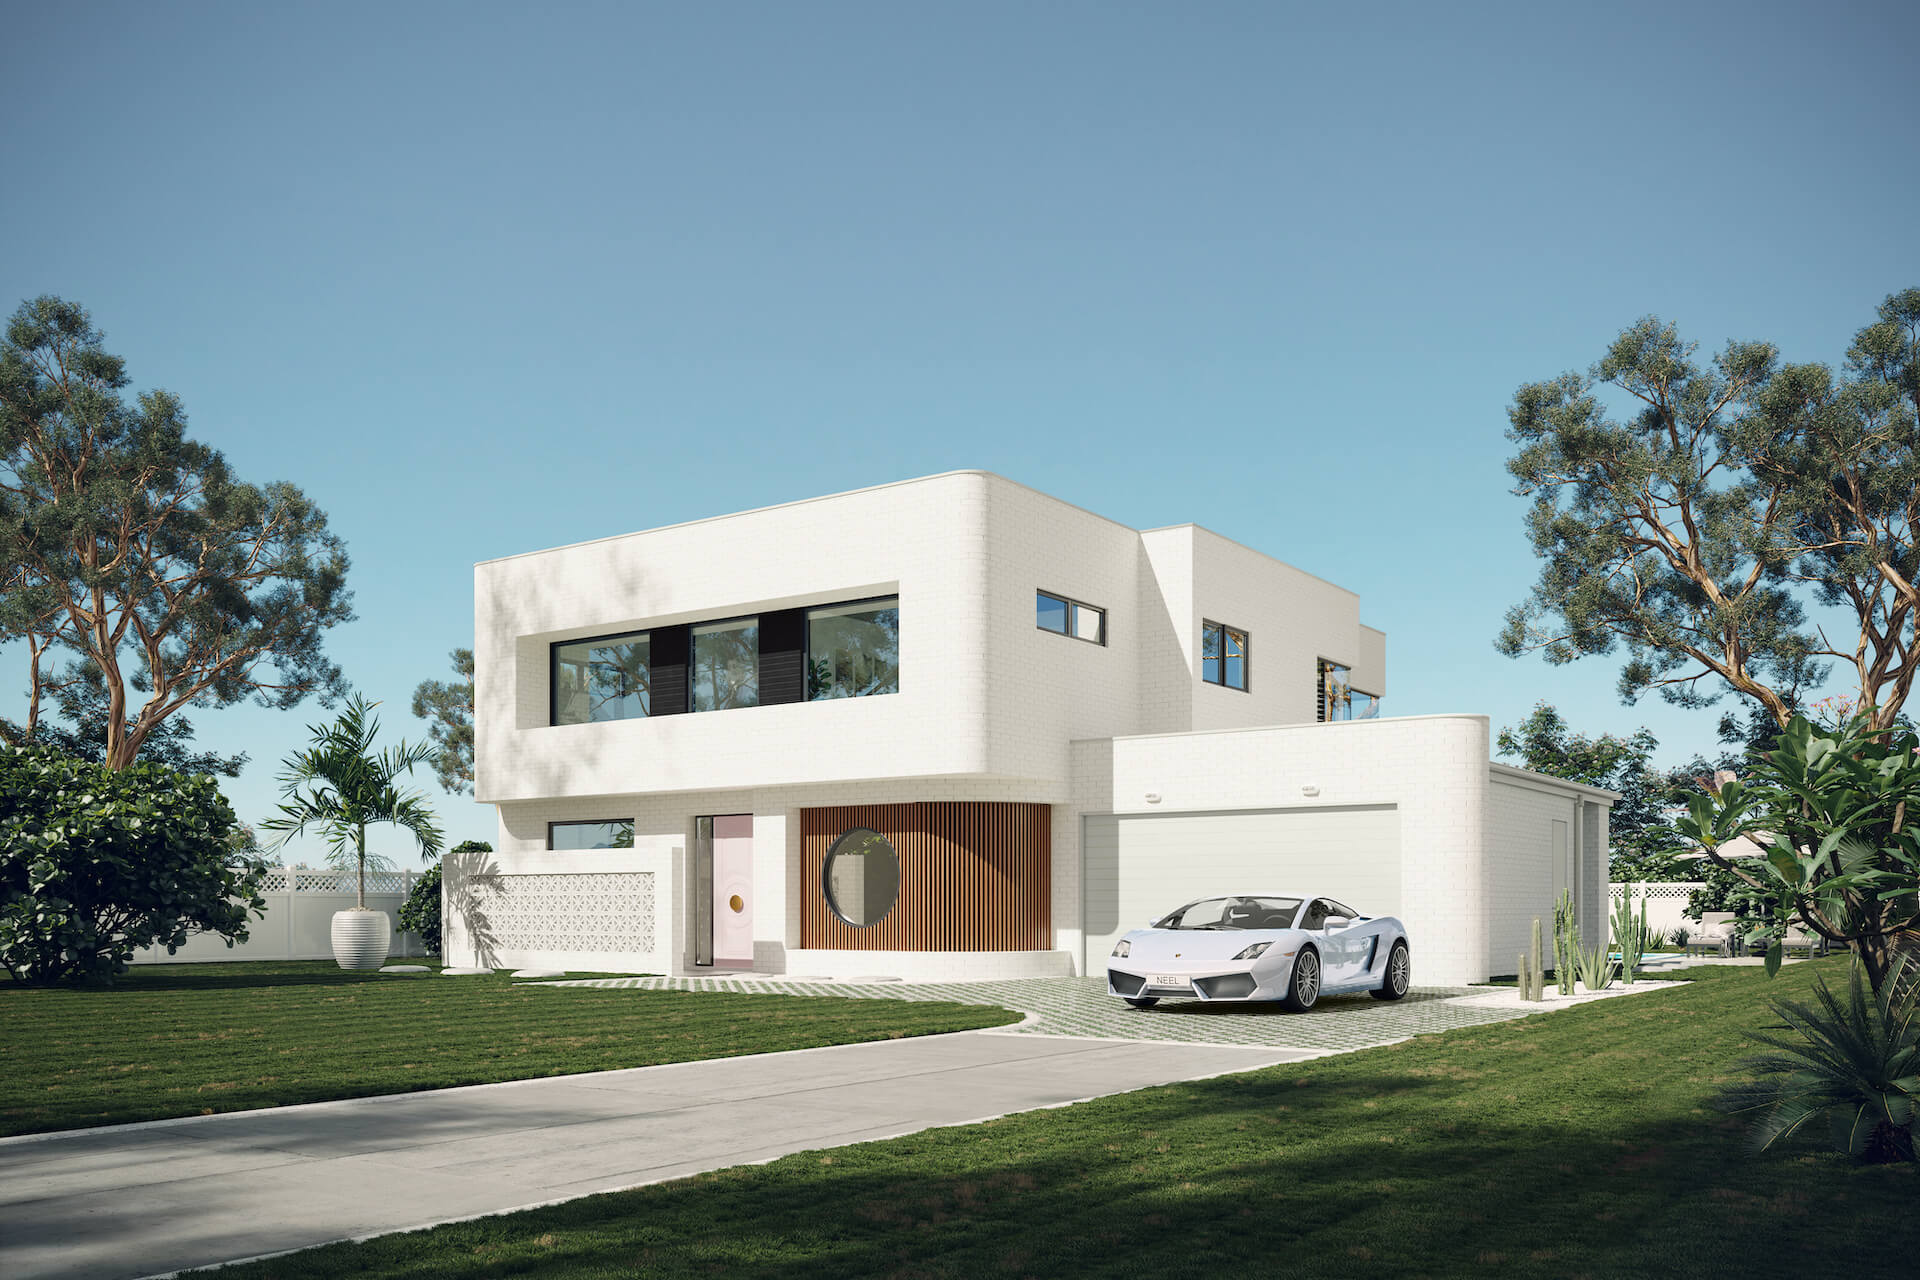 Final House Exterior CGI: Bonus Image with a Car